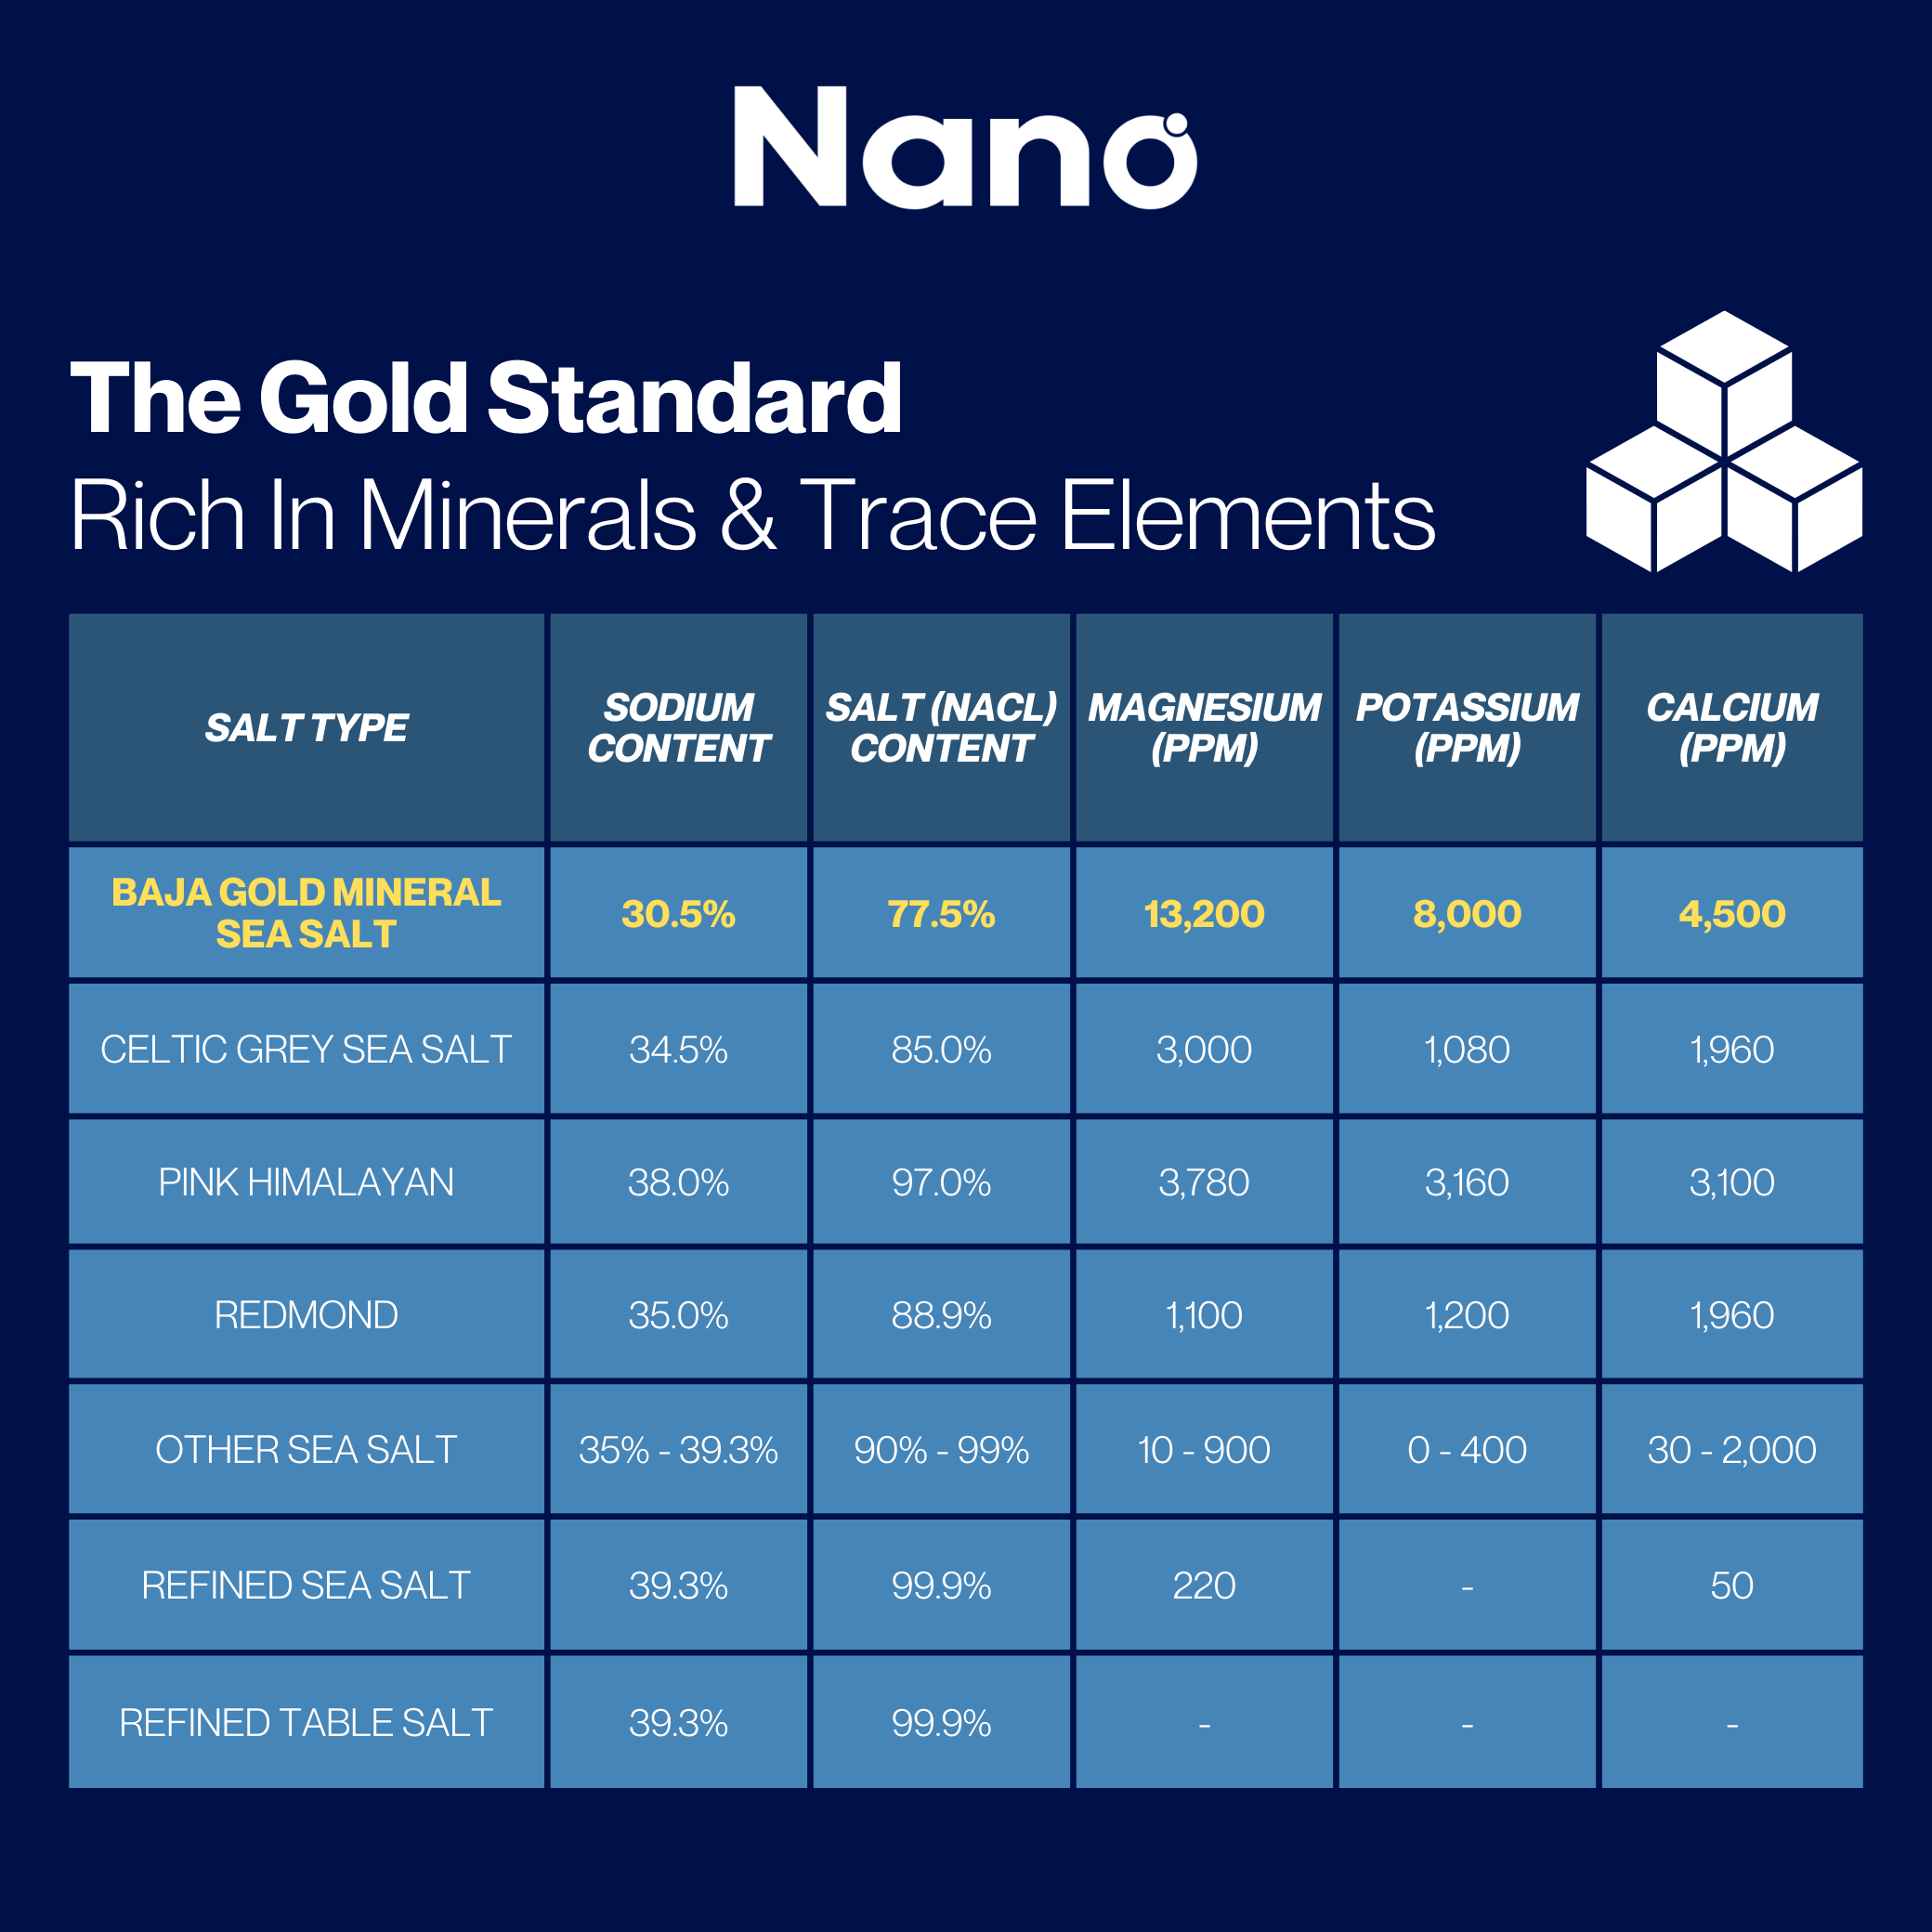 Nano Organic Baja Gold Sea Salt minerals and trace elements infographic. Baja Gold Sea Salt is rich in magnesium, potassium and calcium